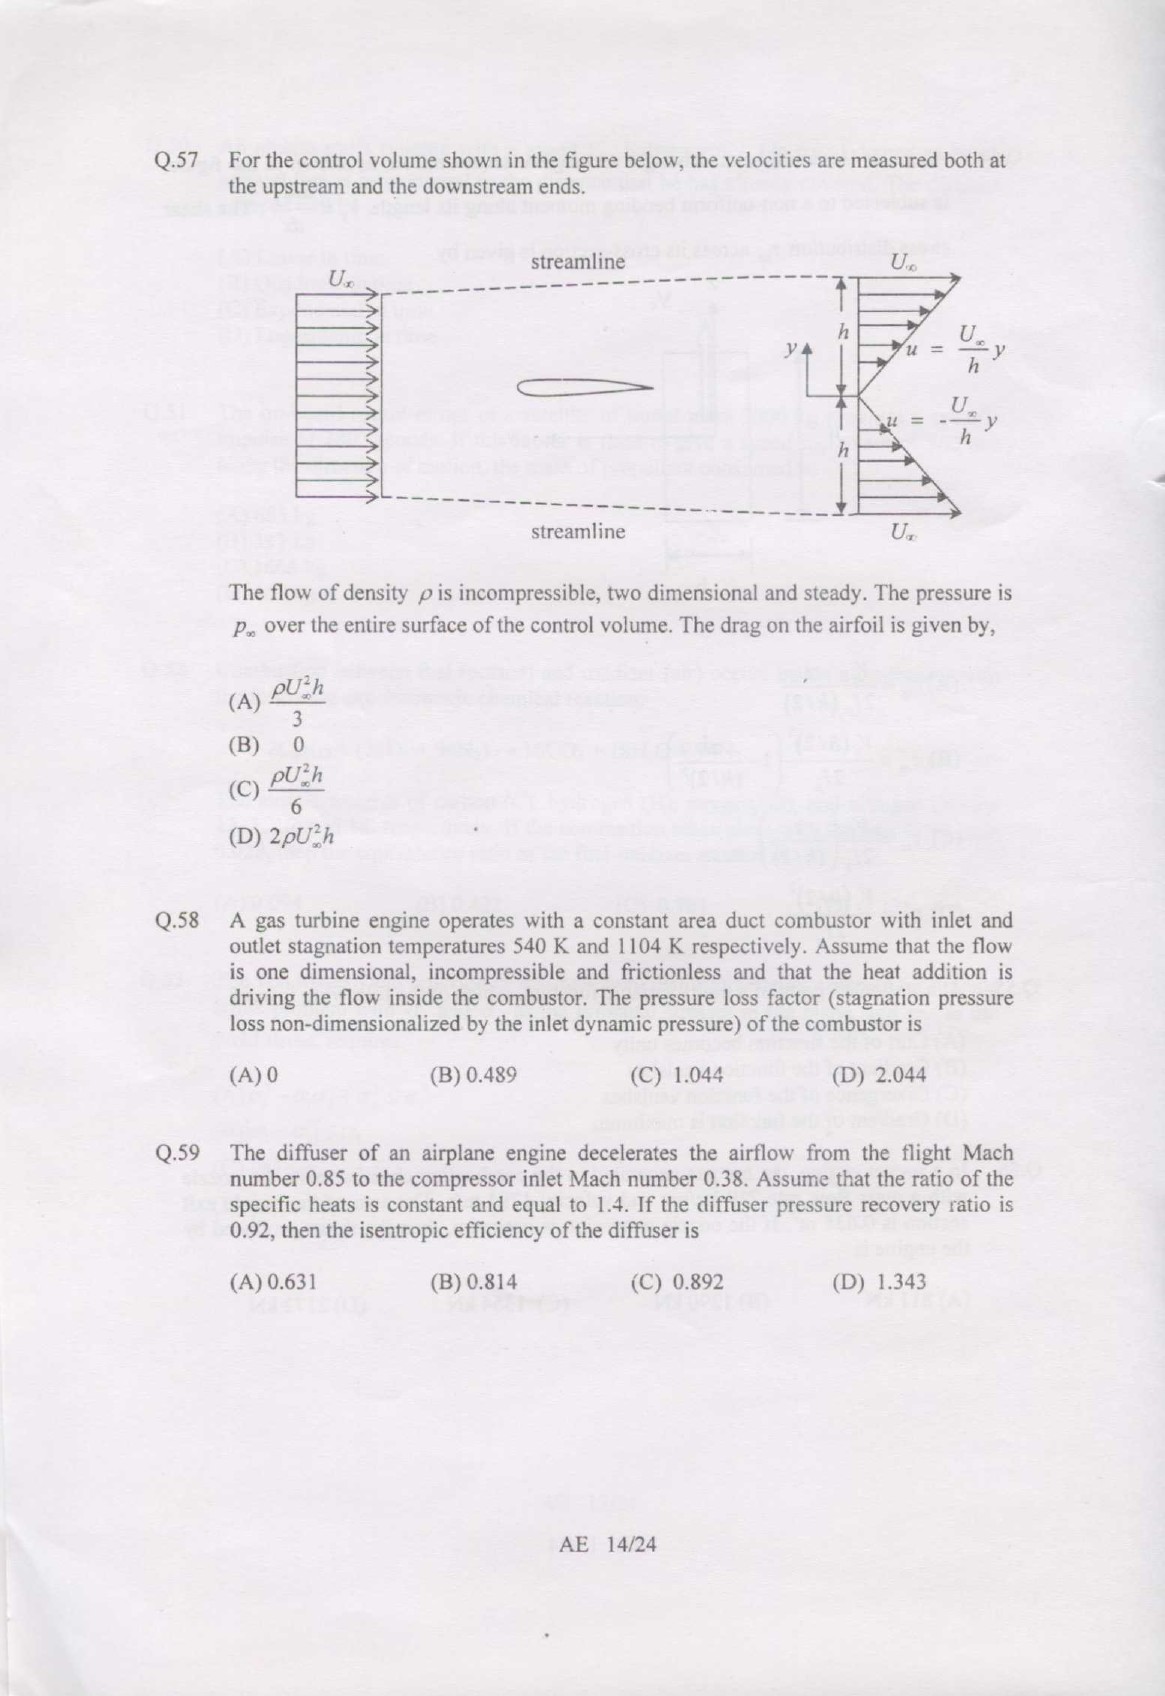 GATE Exam 2007 Aerospace Engineering Question Paper 14